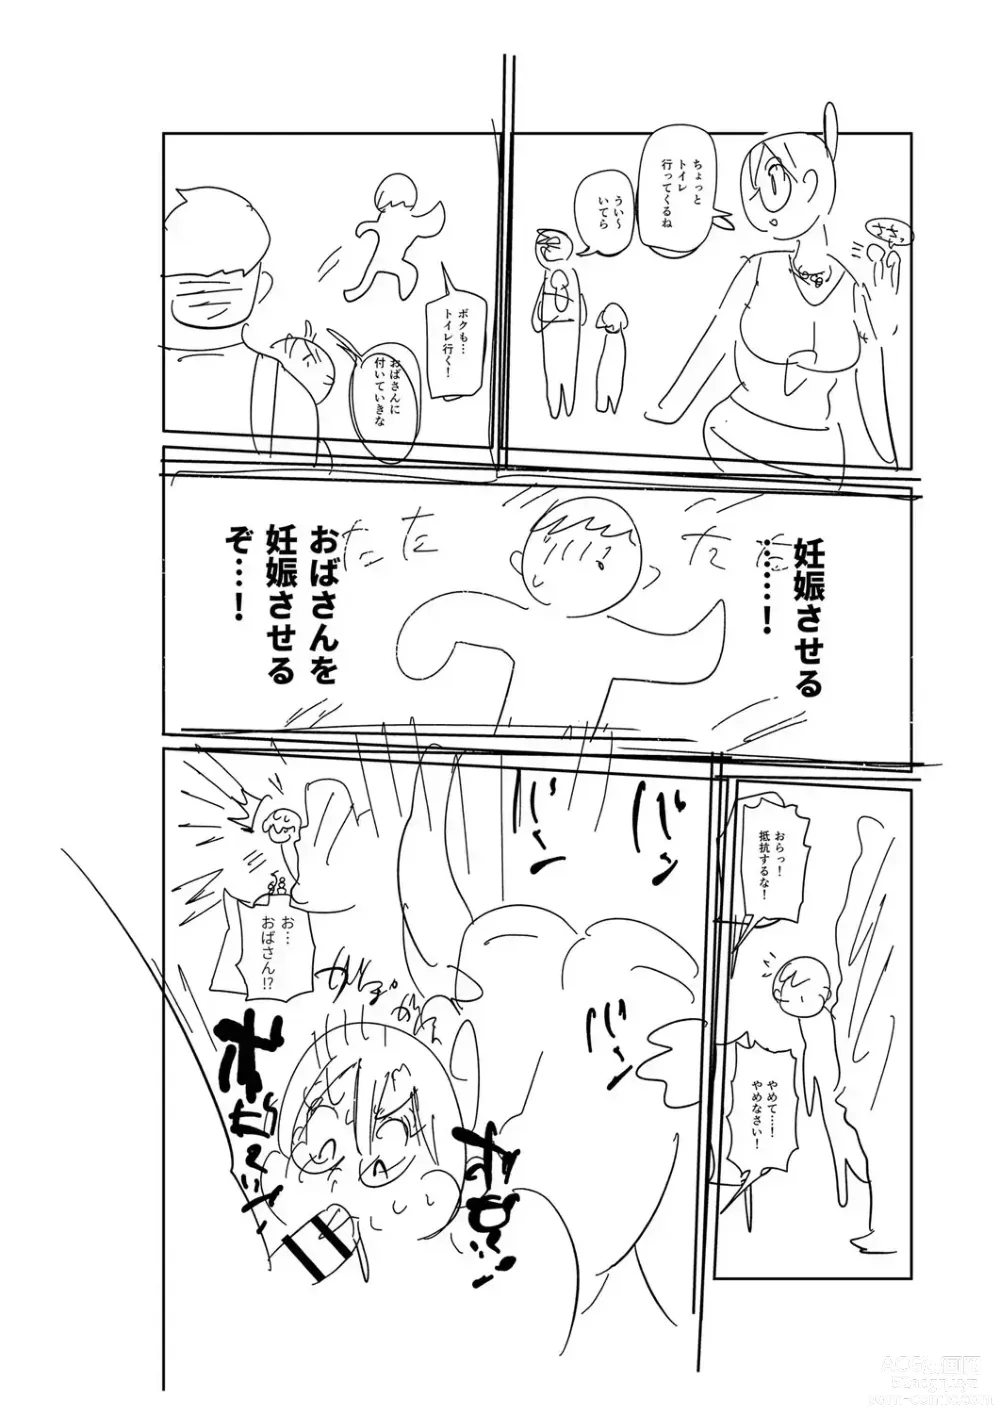 Page 329 of manga 아이가 있는 부인 아라이씨